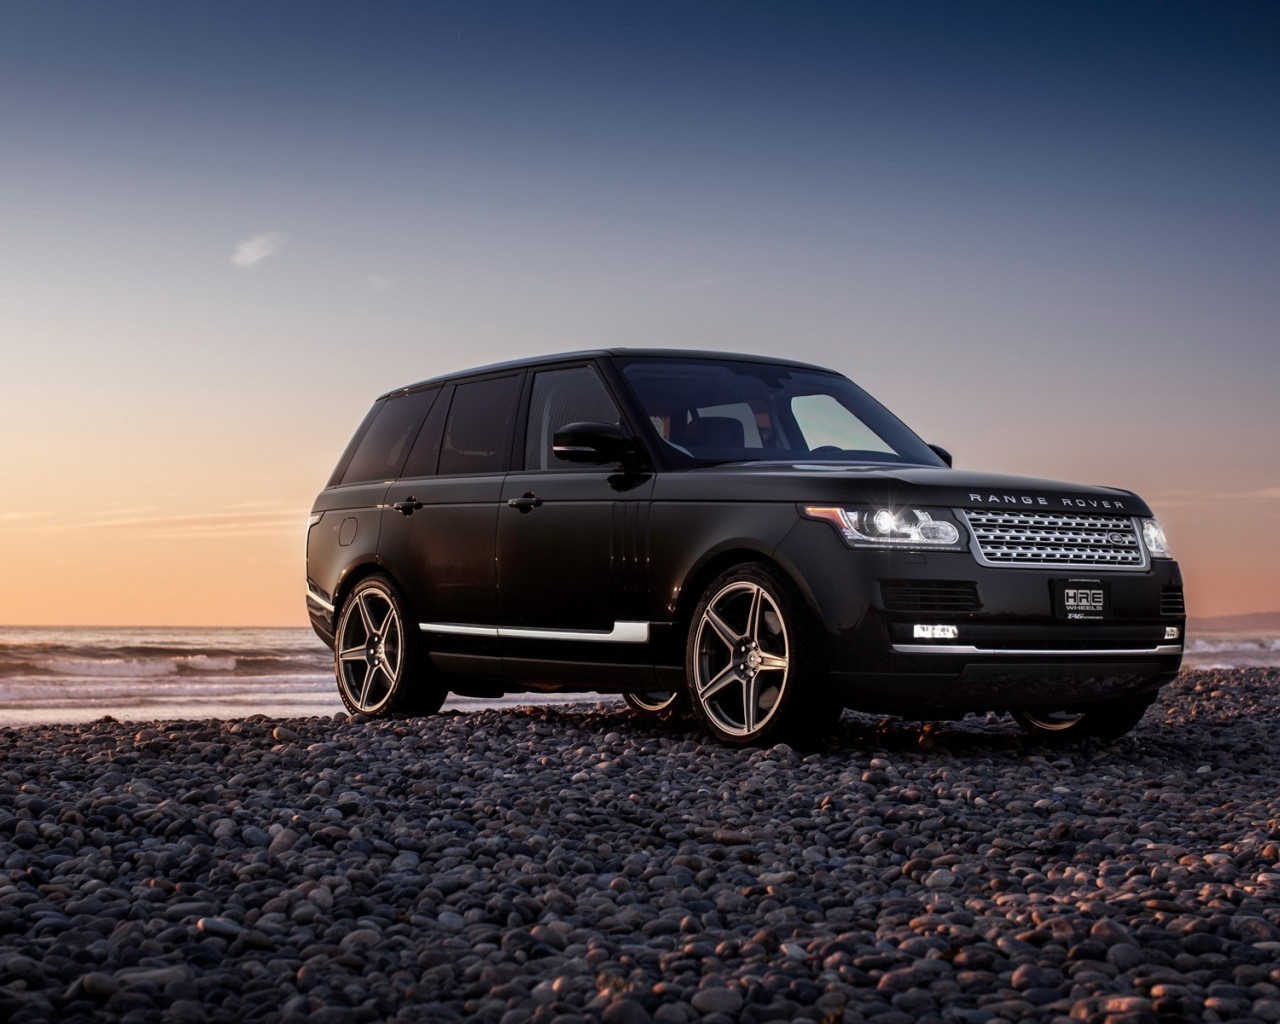 New Black Range Rover for 1280 x 1024 resolution